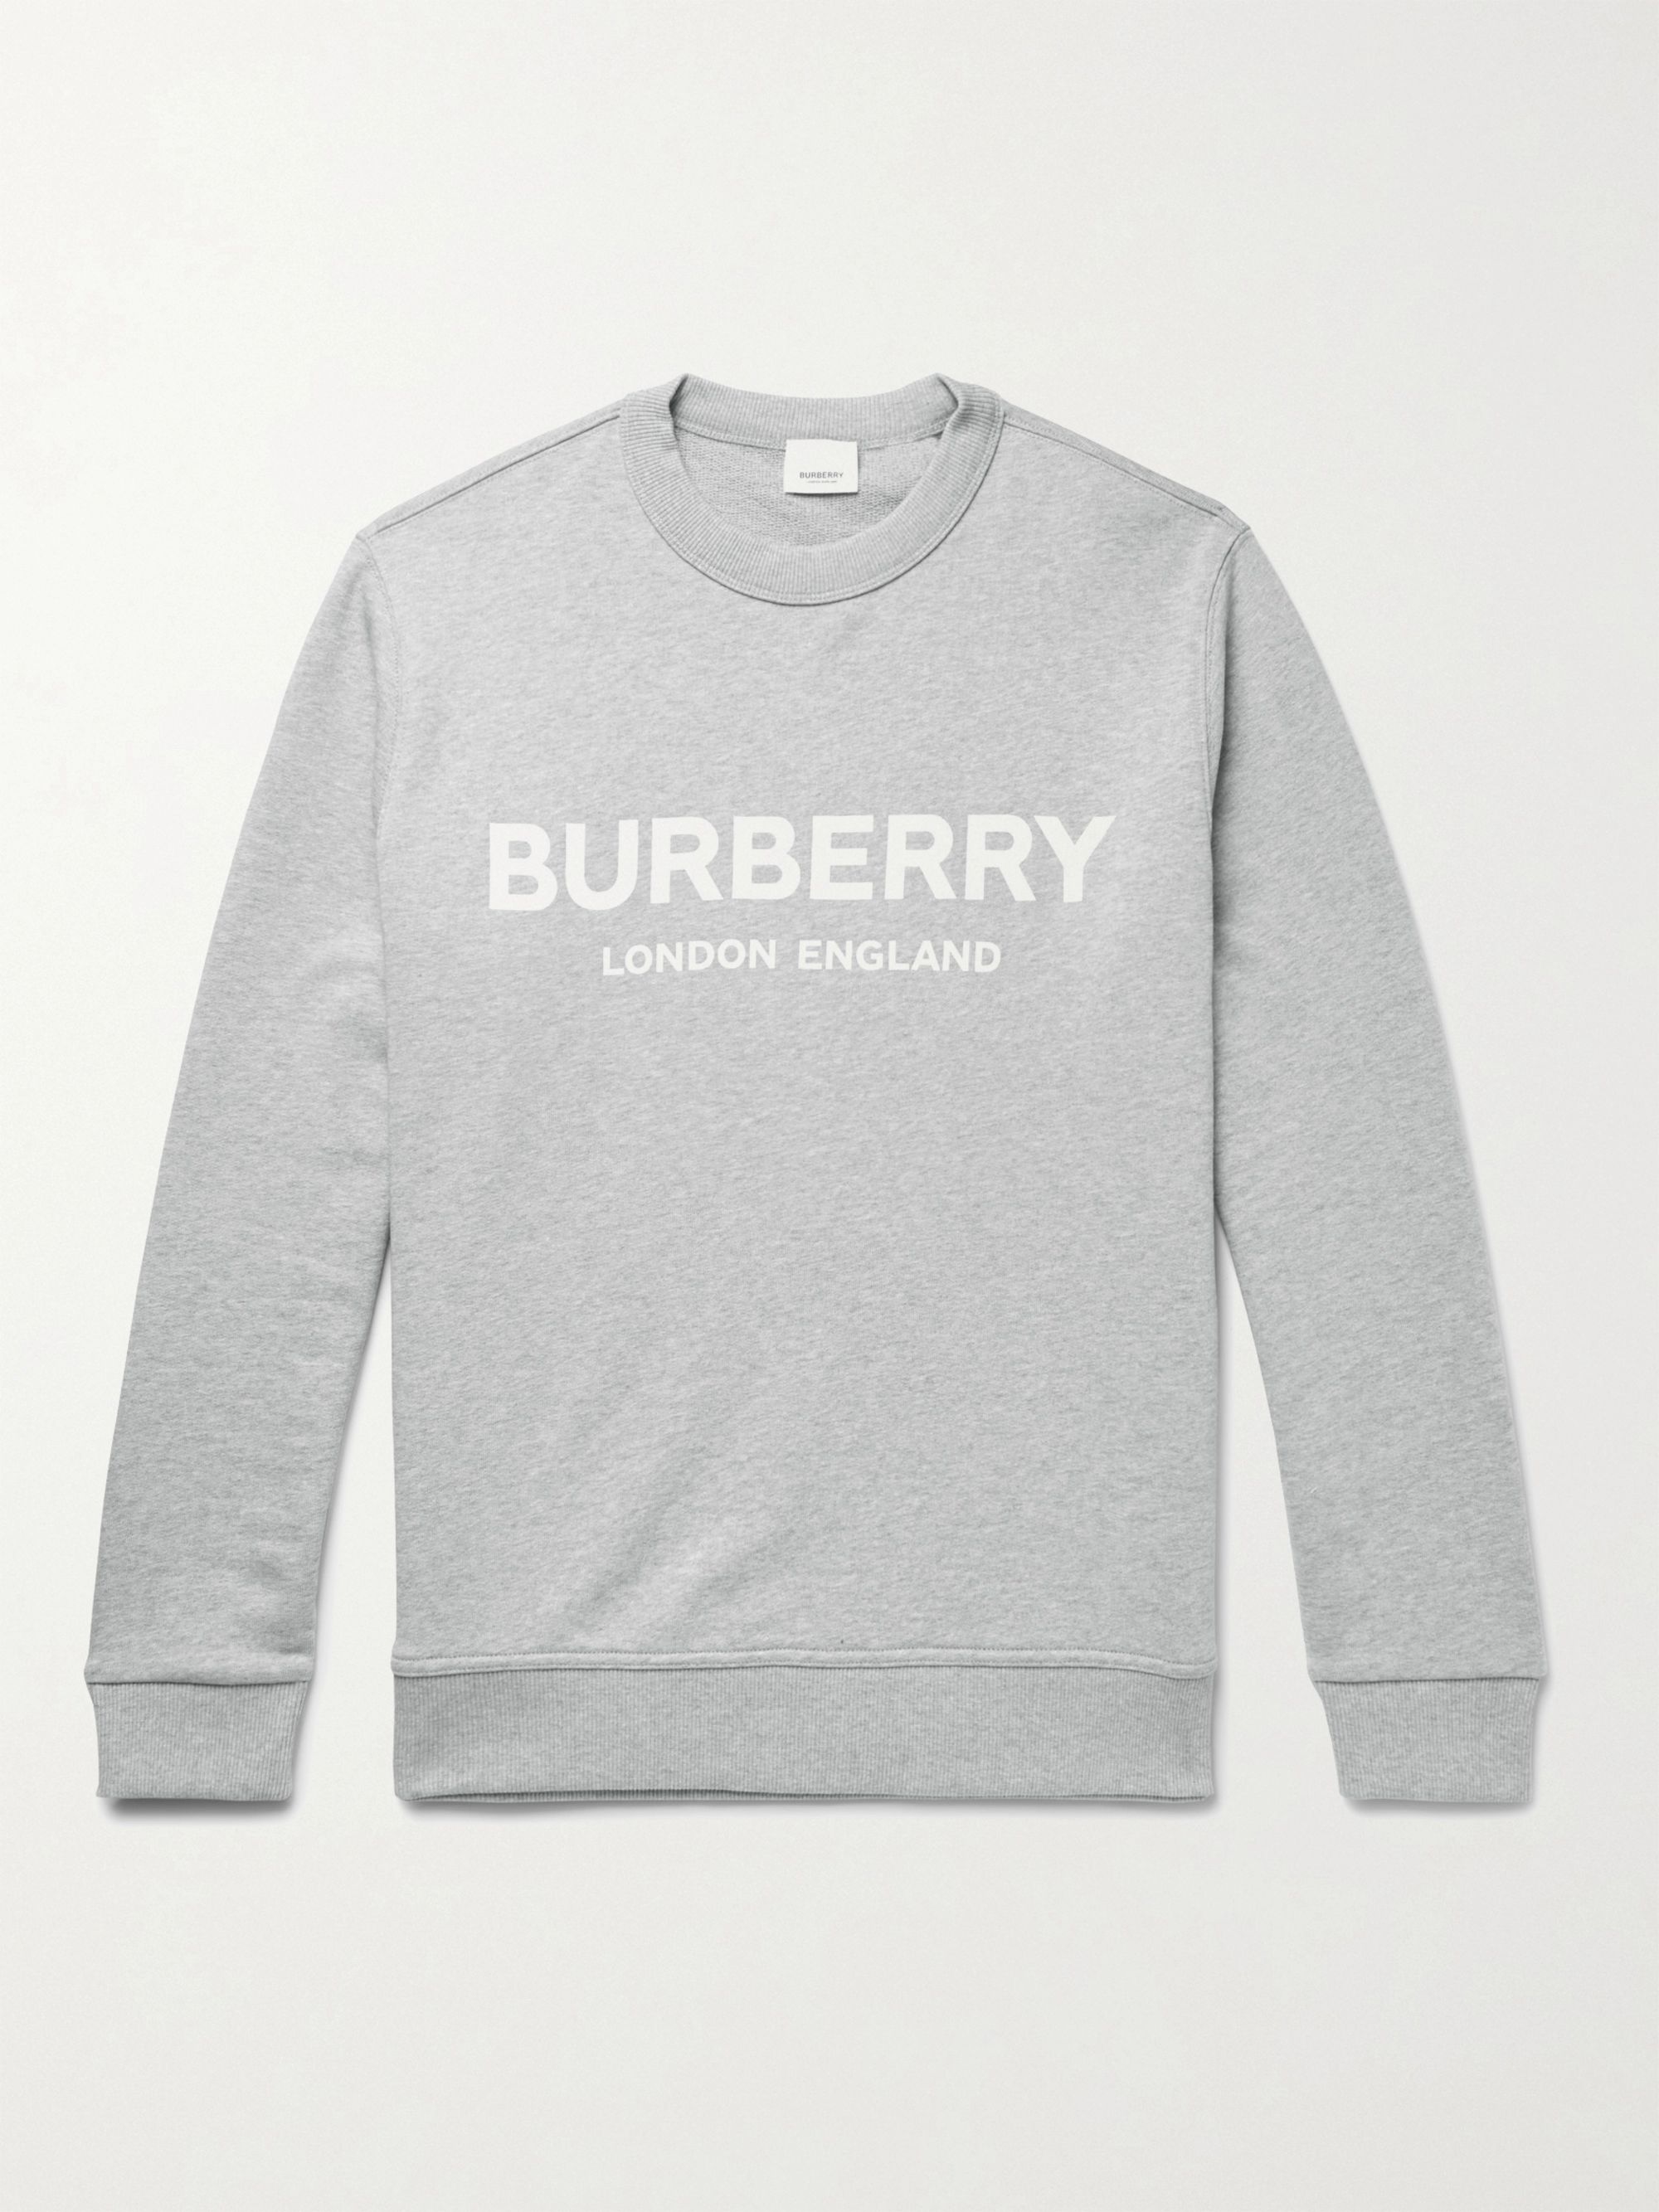 burberry white sweater